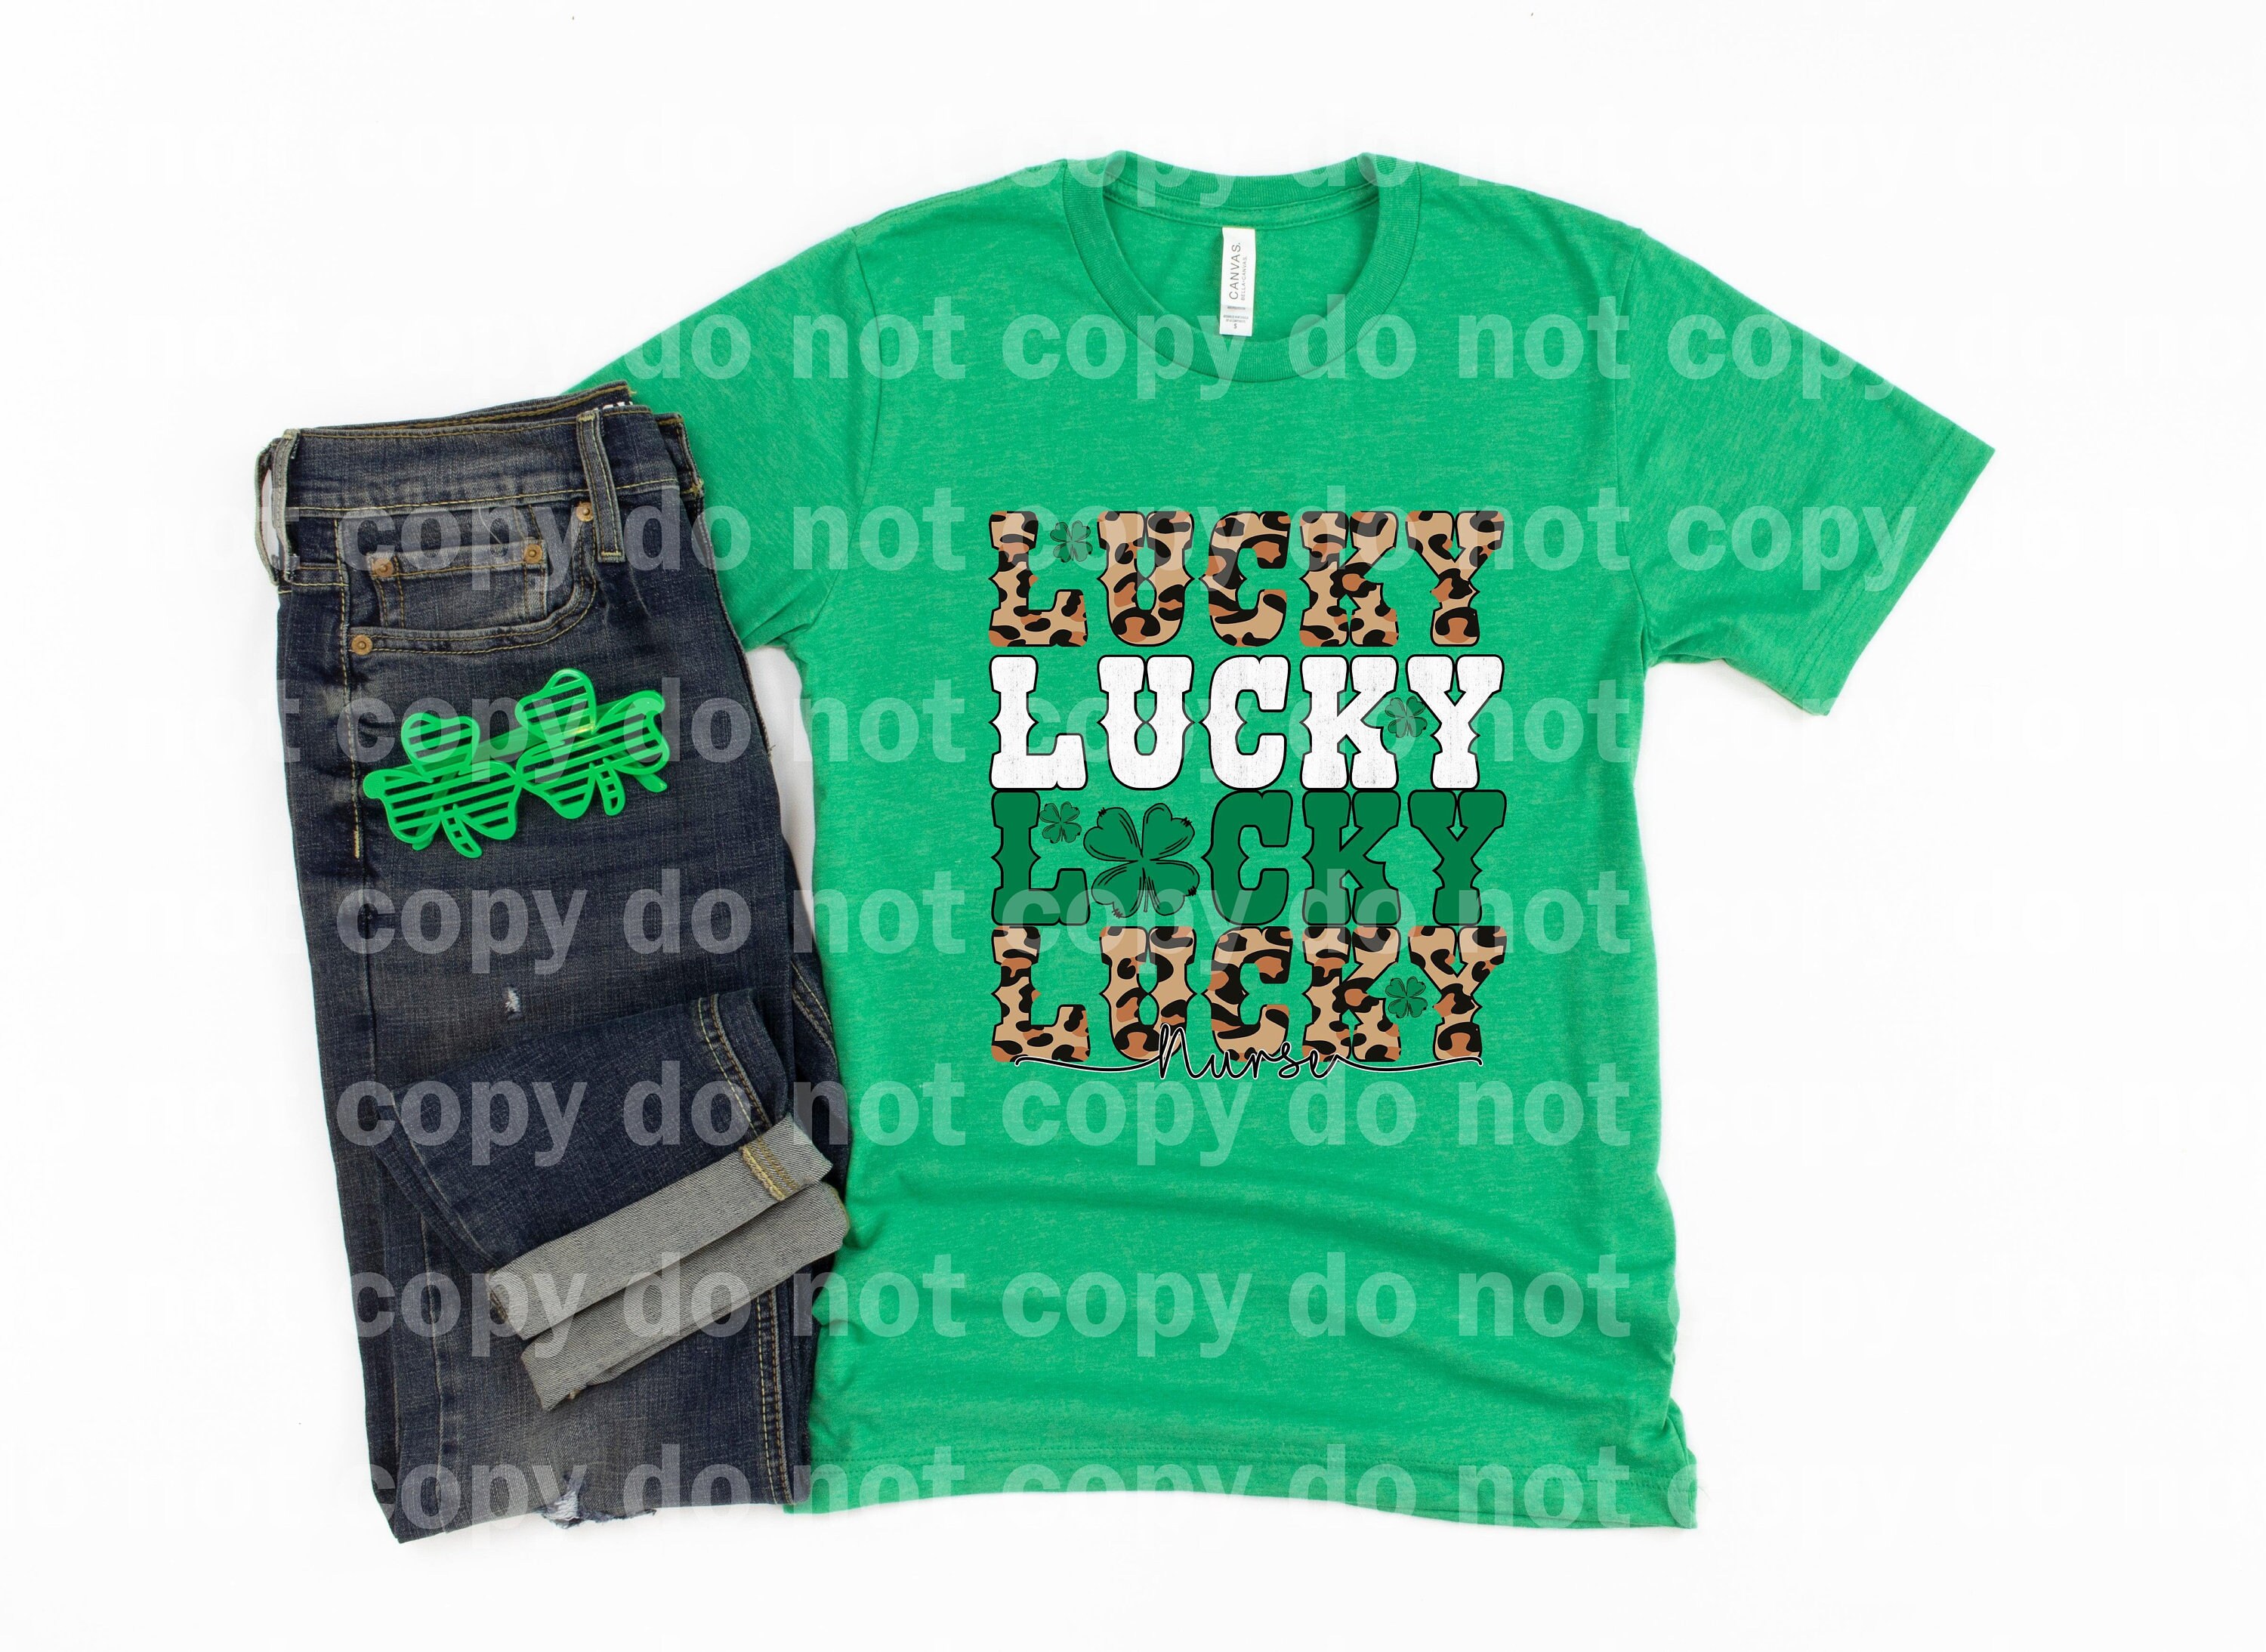 Badass Shirt Maker Neon Green Dream Print or Sublimation Print